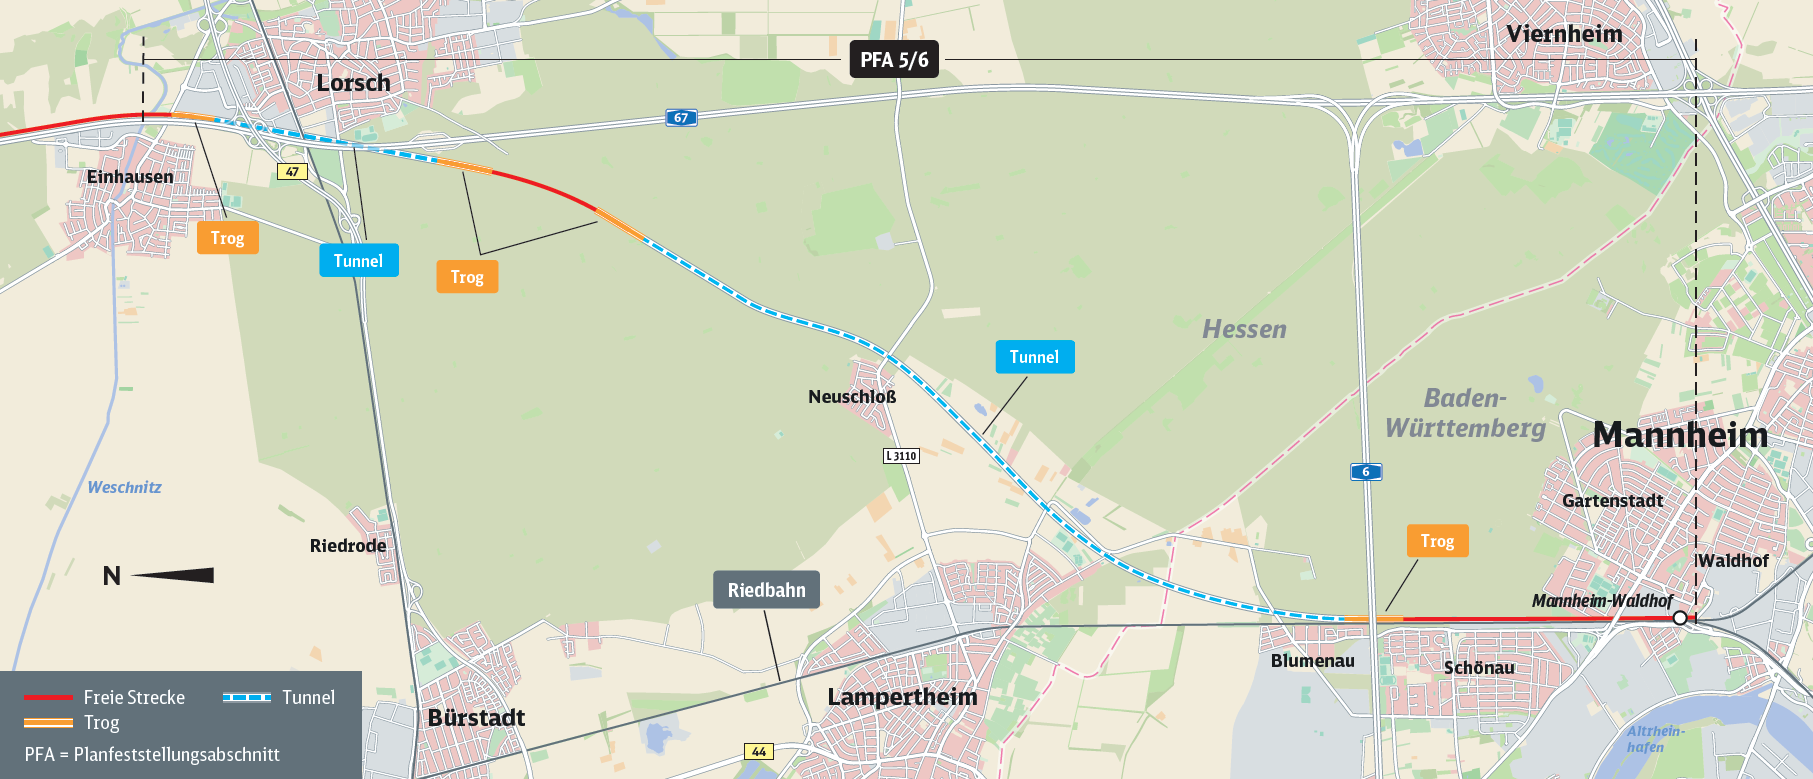 Karte PFA 5/6 Lorsch–Mannheim-Waldhof